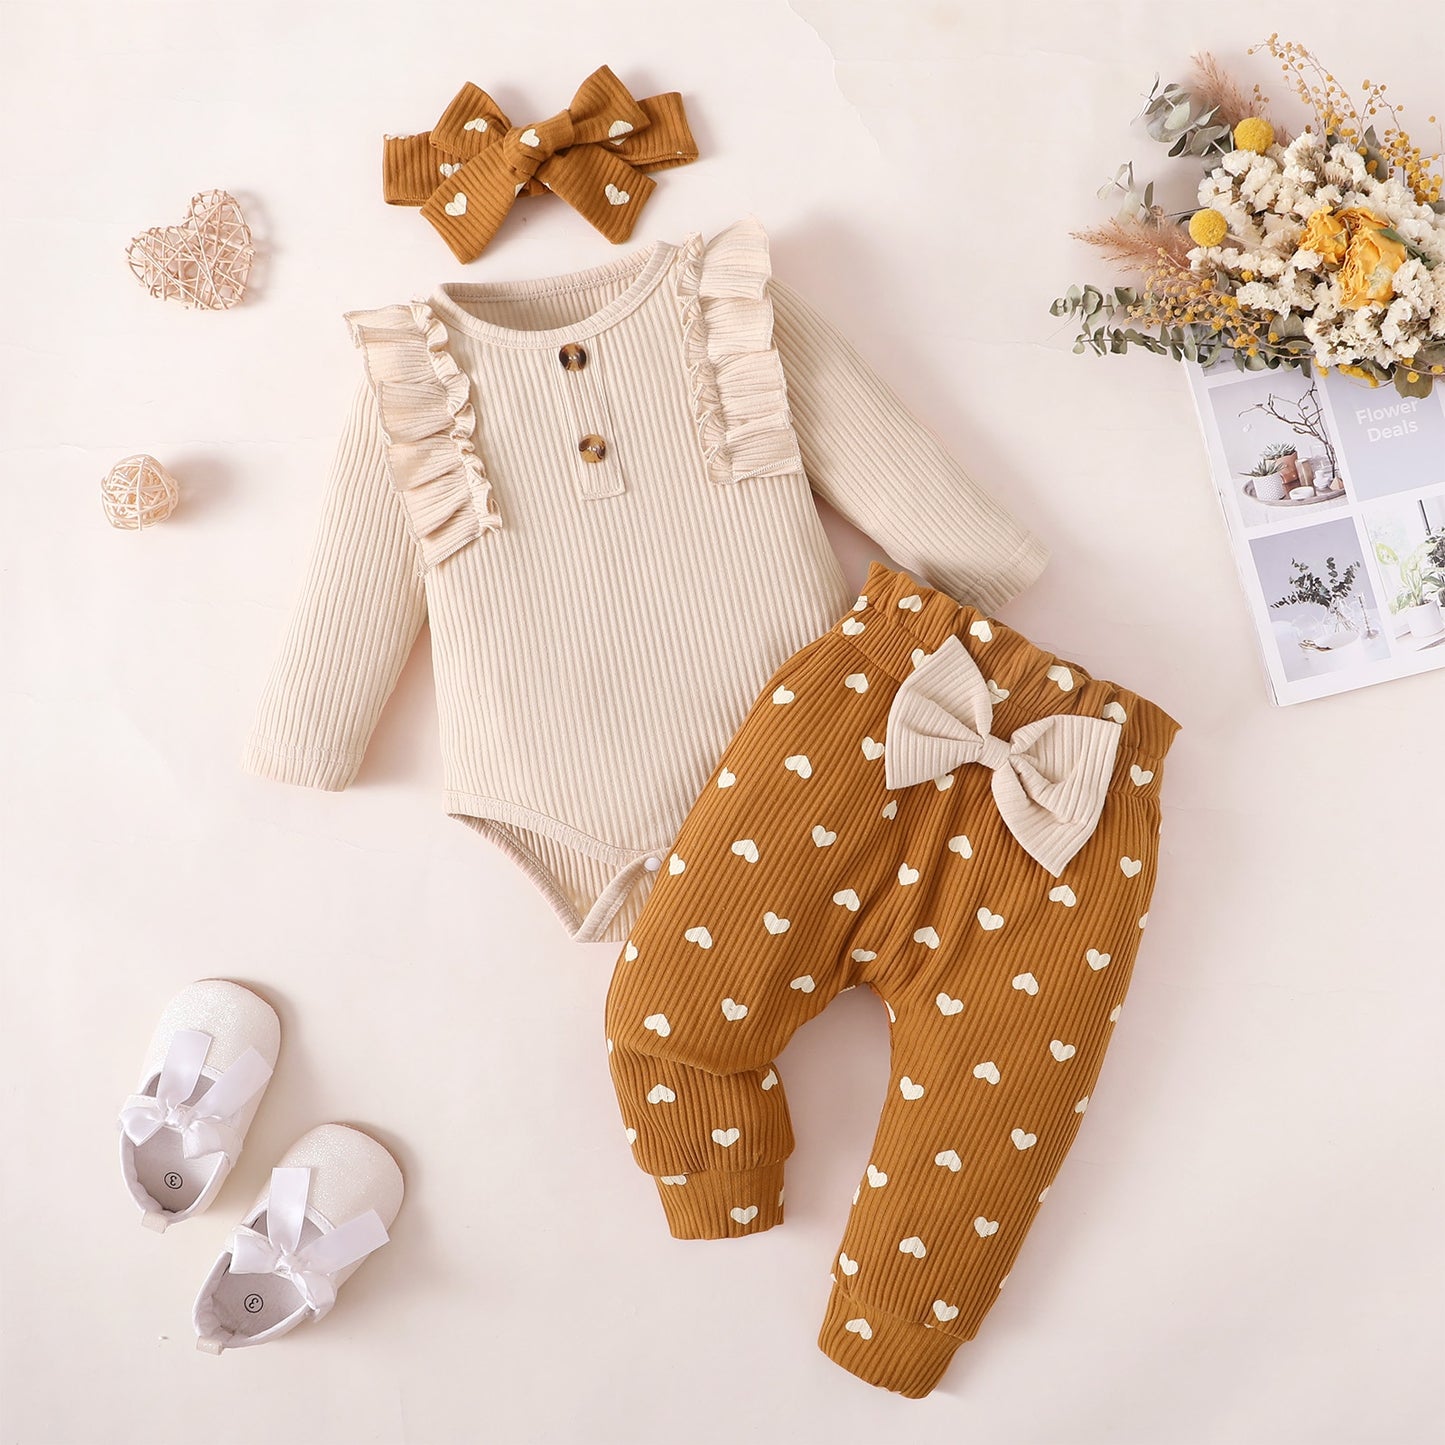 Autumn 3pcs Toddler Newborn Baby Girl Clothes Set Long Sleeve Knitting Top Bodysuit Printed Love Heart Pants Headband Outfit